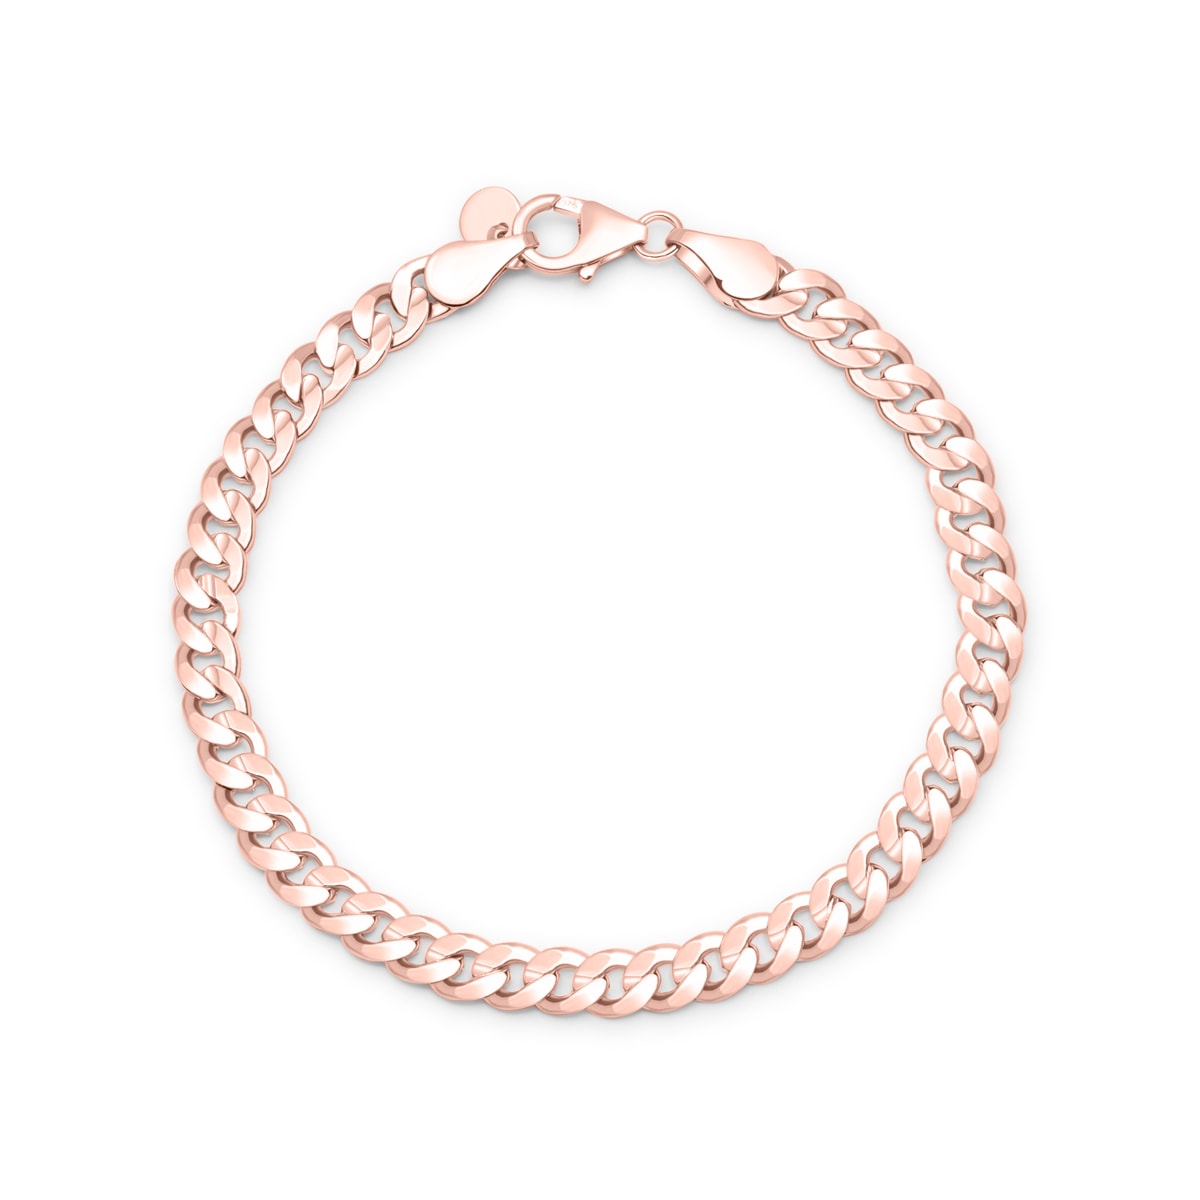 Thick rose gold cuban chain bracelet